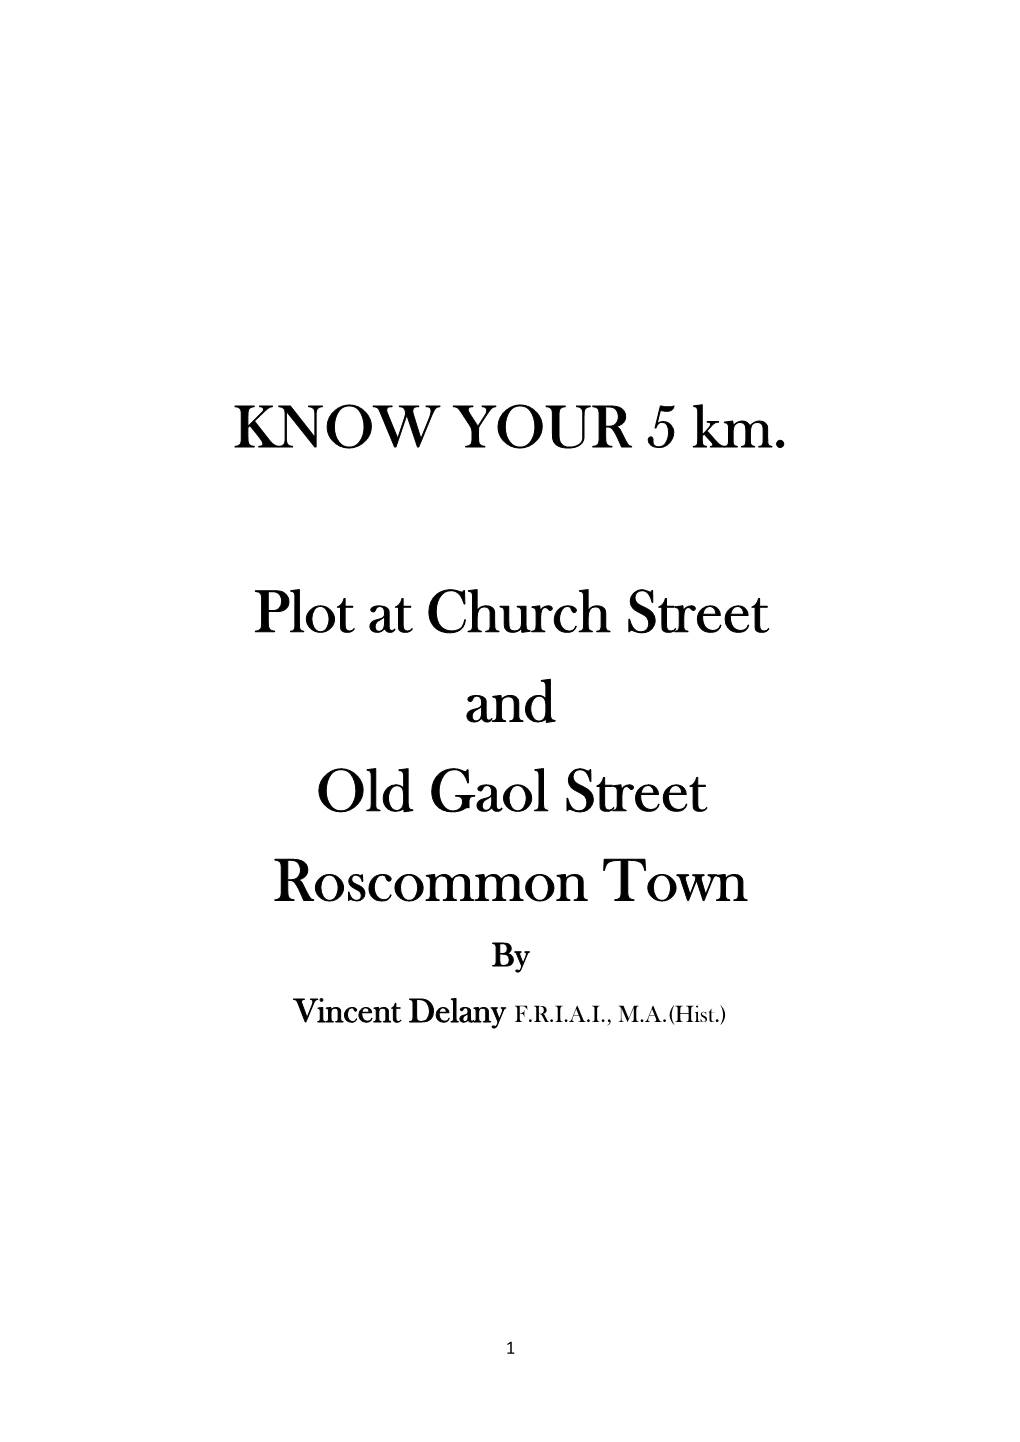 Church-St-Main-St-Roscommon